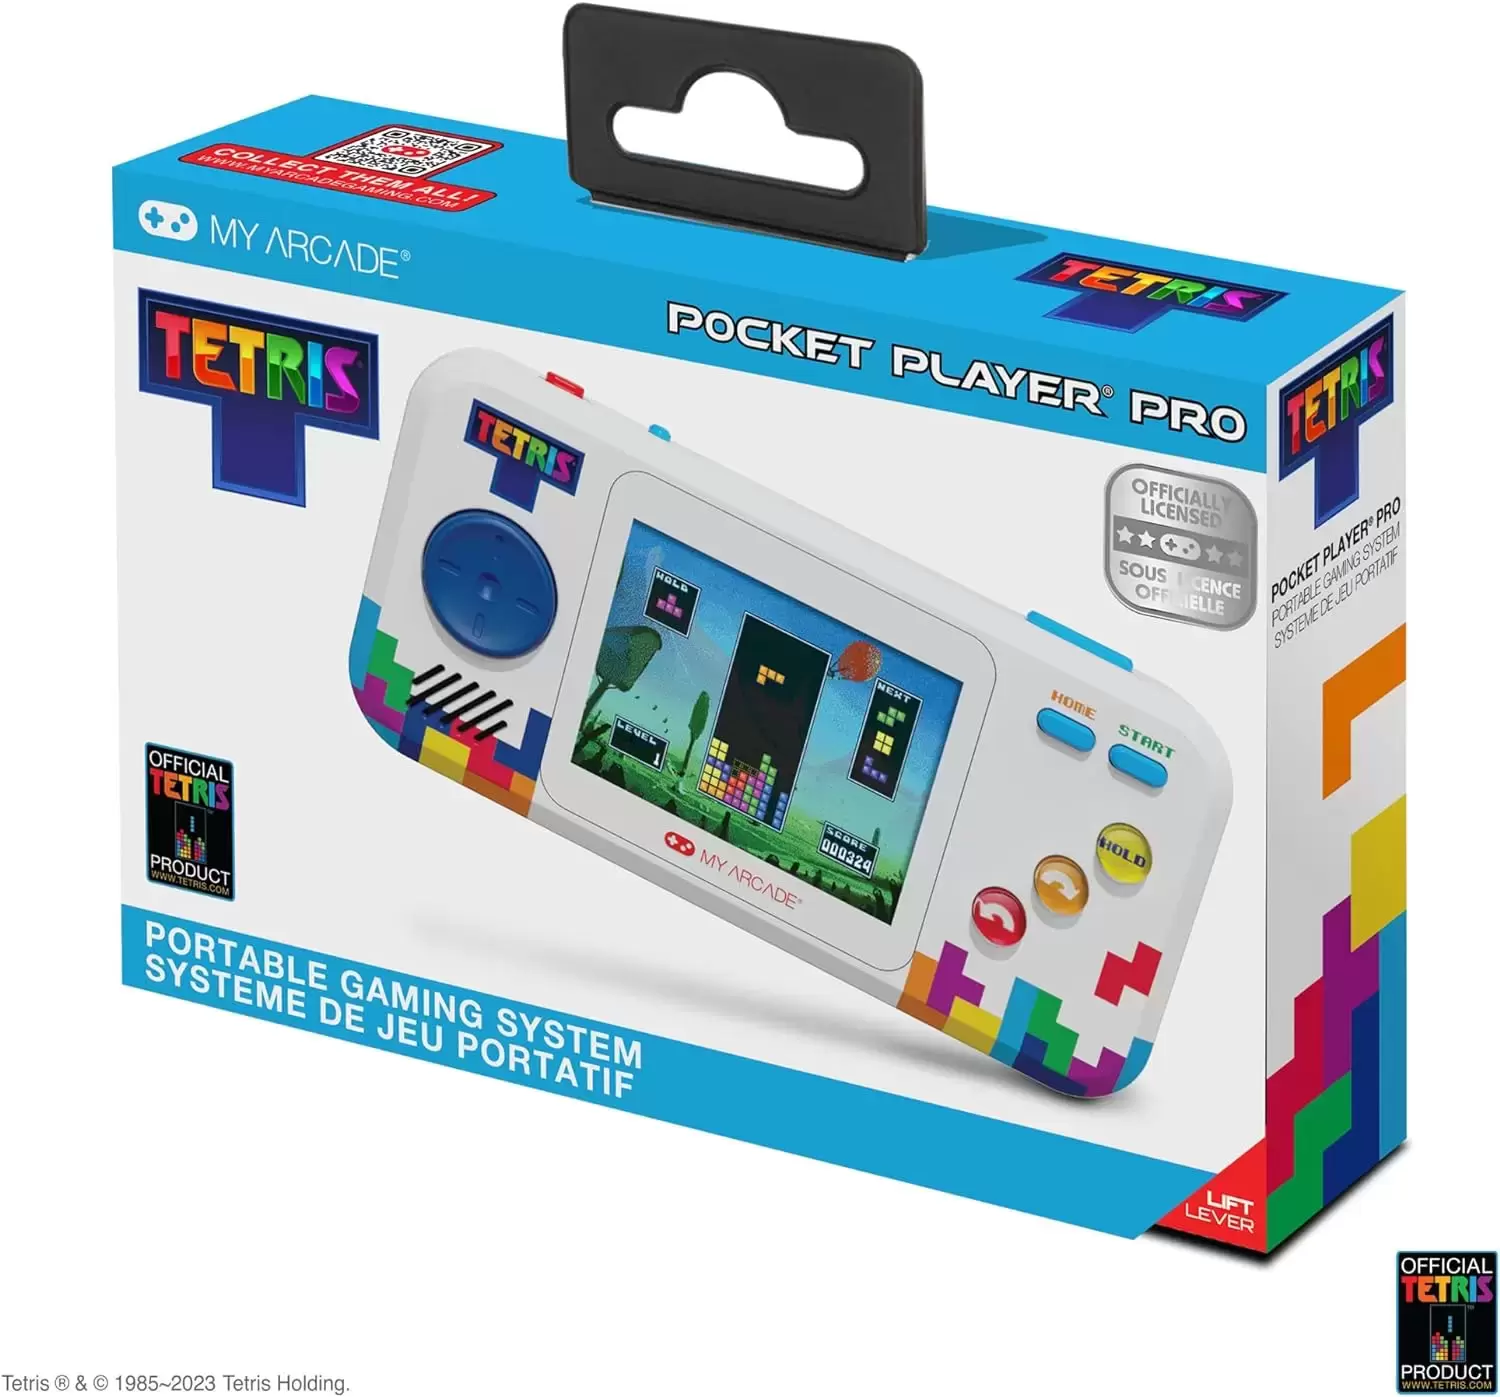 Mini Arcade Classics - My Arcade - Pocket Player Pro - Tetris